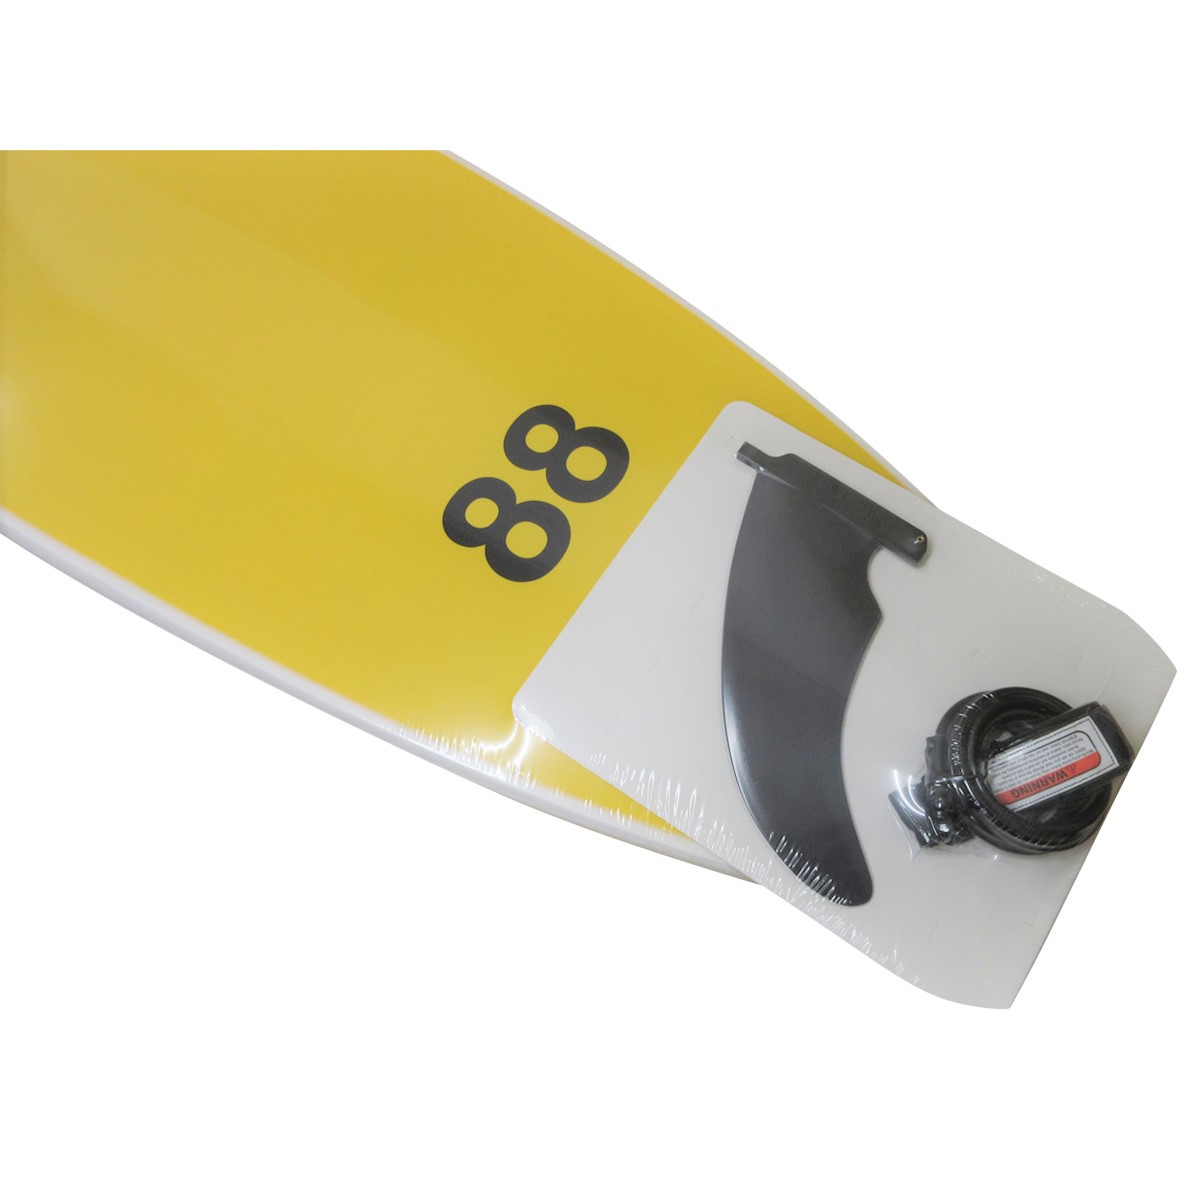 88 SURFBOARDS / SINGLE 8`0 WHITE